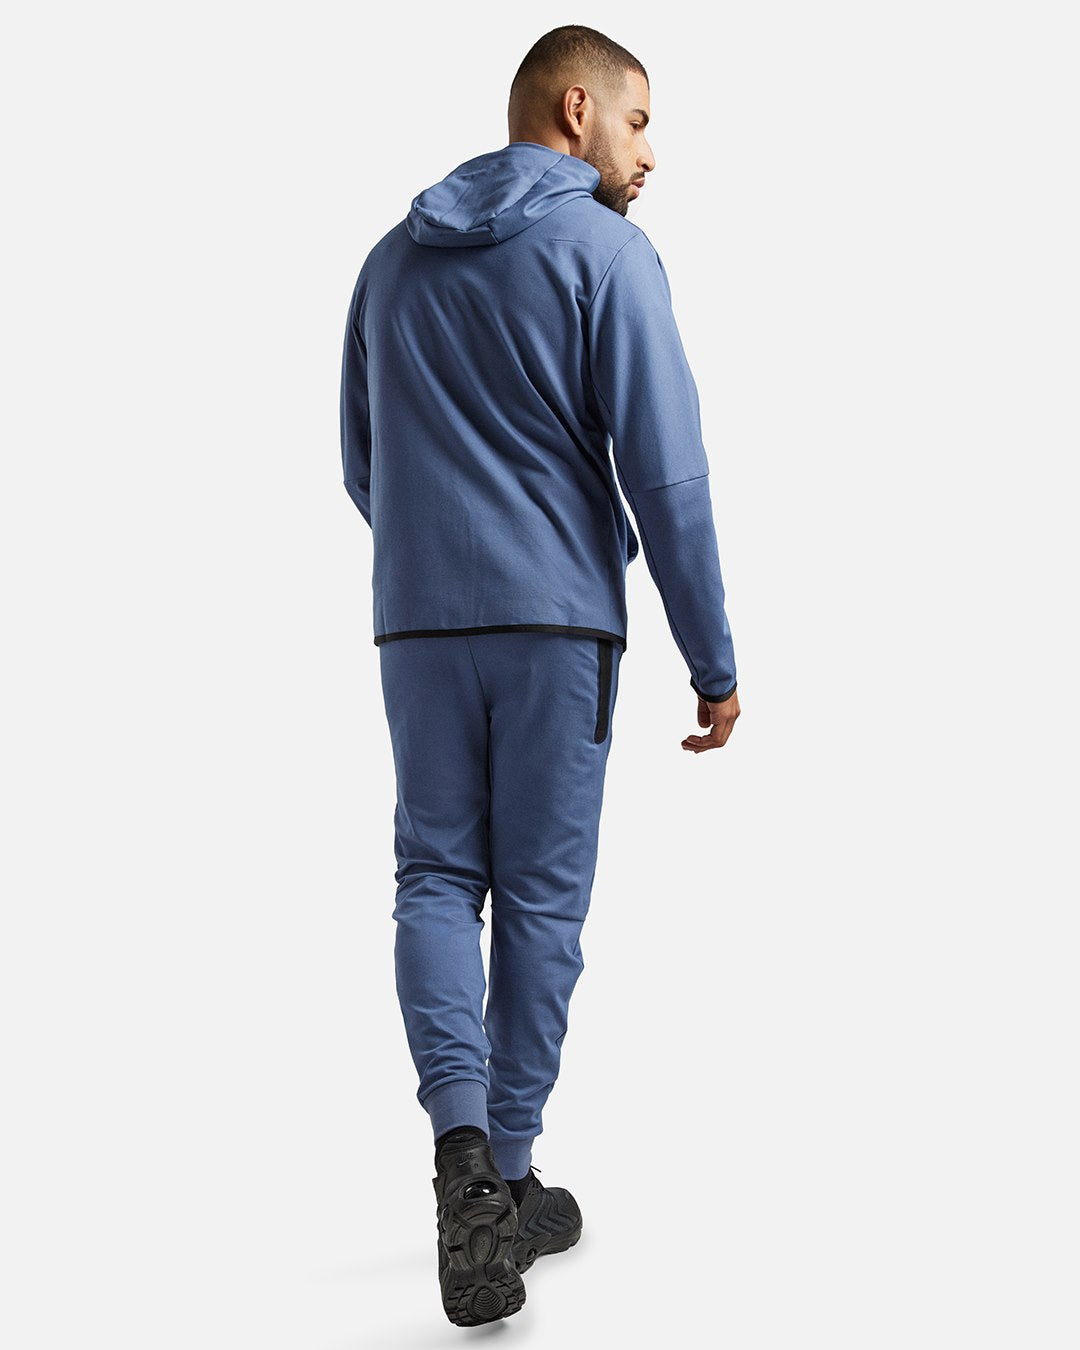 Nike Tech Fleece Leichter Trainingsanzug – Blau/Schwarz